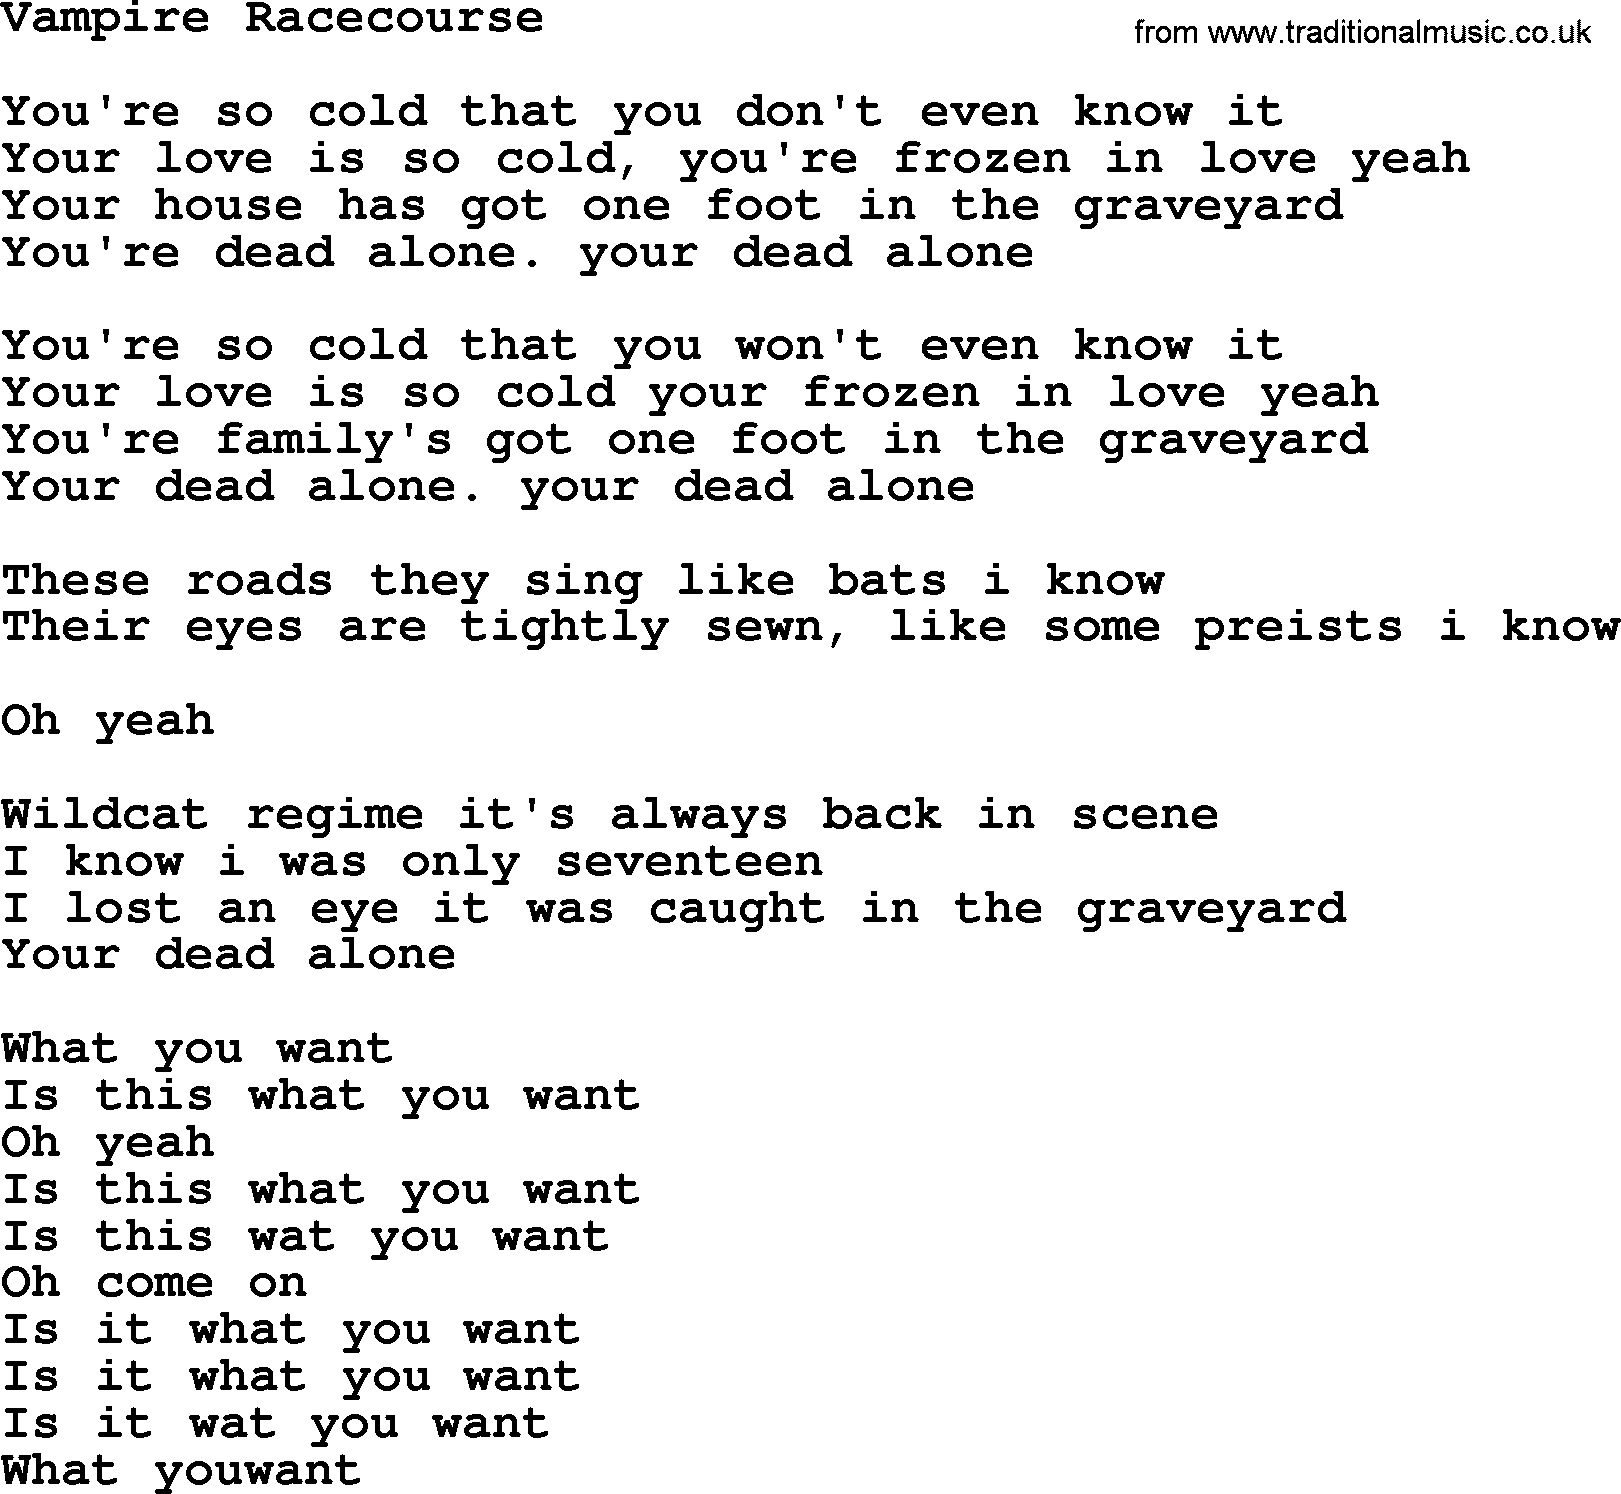 The Byrds song Vampire Racecourse, lyrics